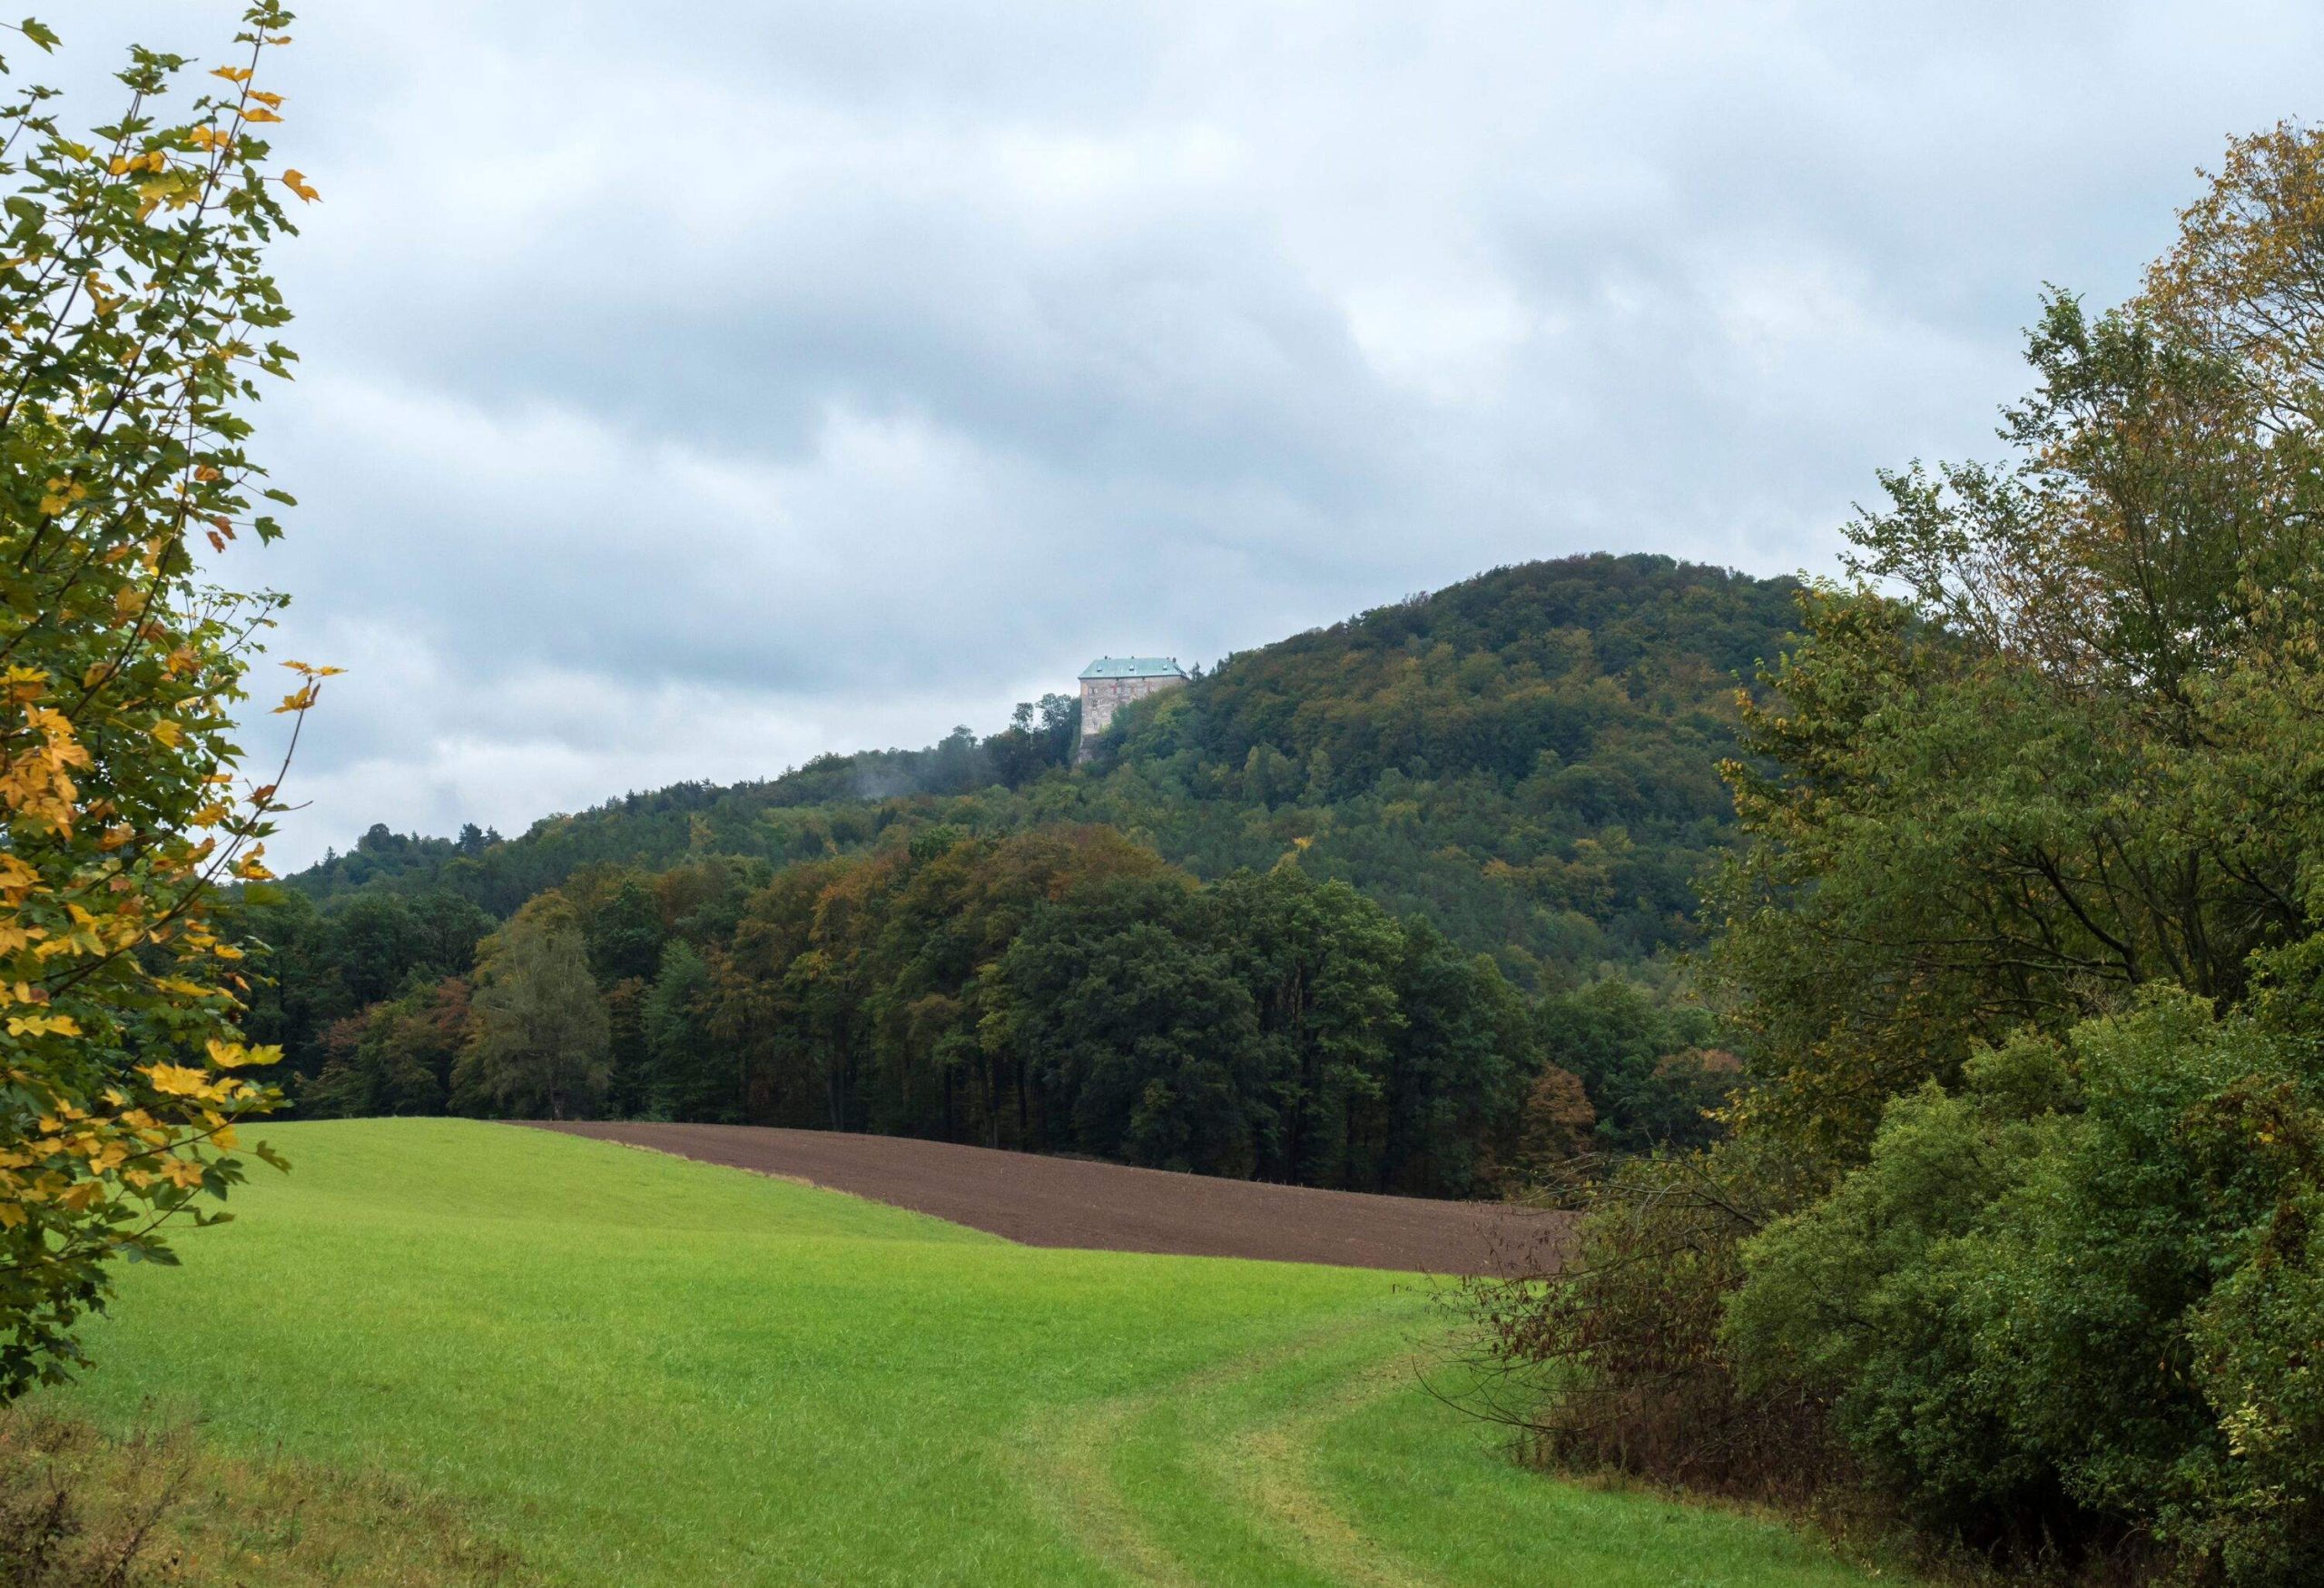 Meadow, fields and forest with view of medieval castle Houska. Autumn, moody sky. Landscape in Kokorinsko, Czech Republic